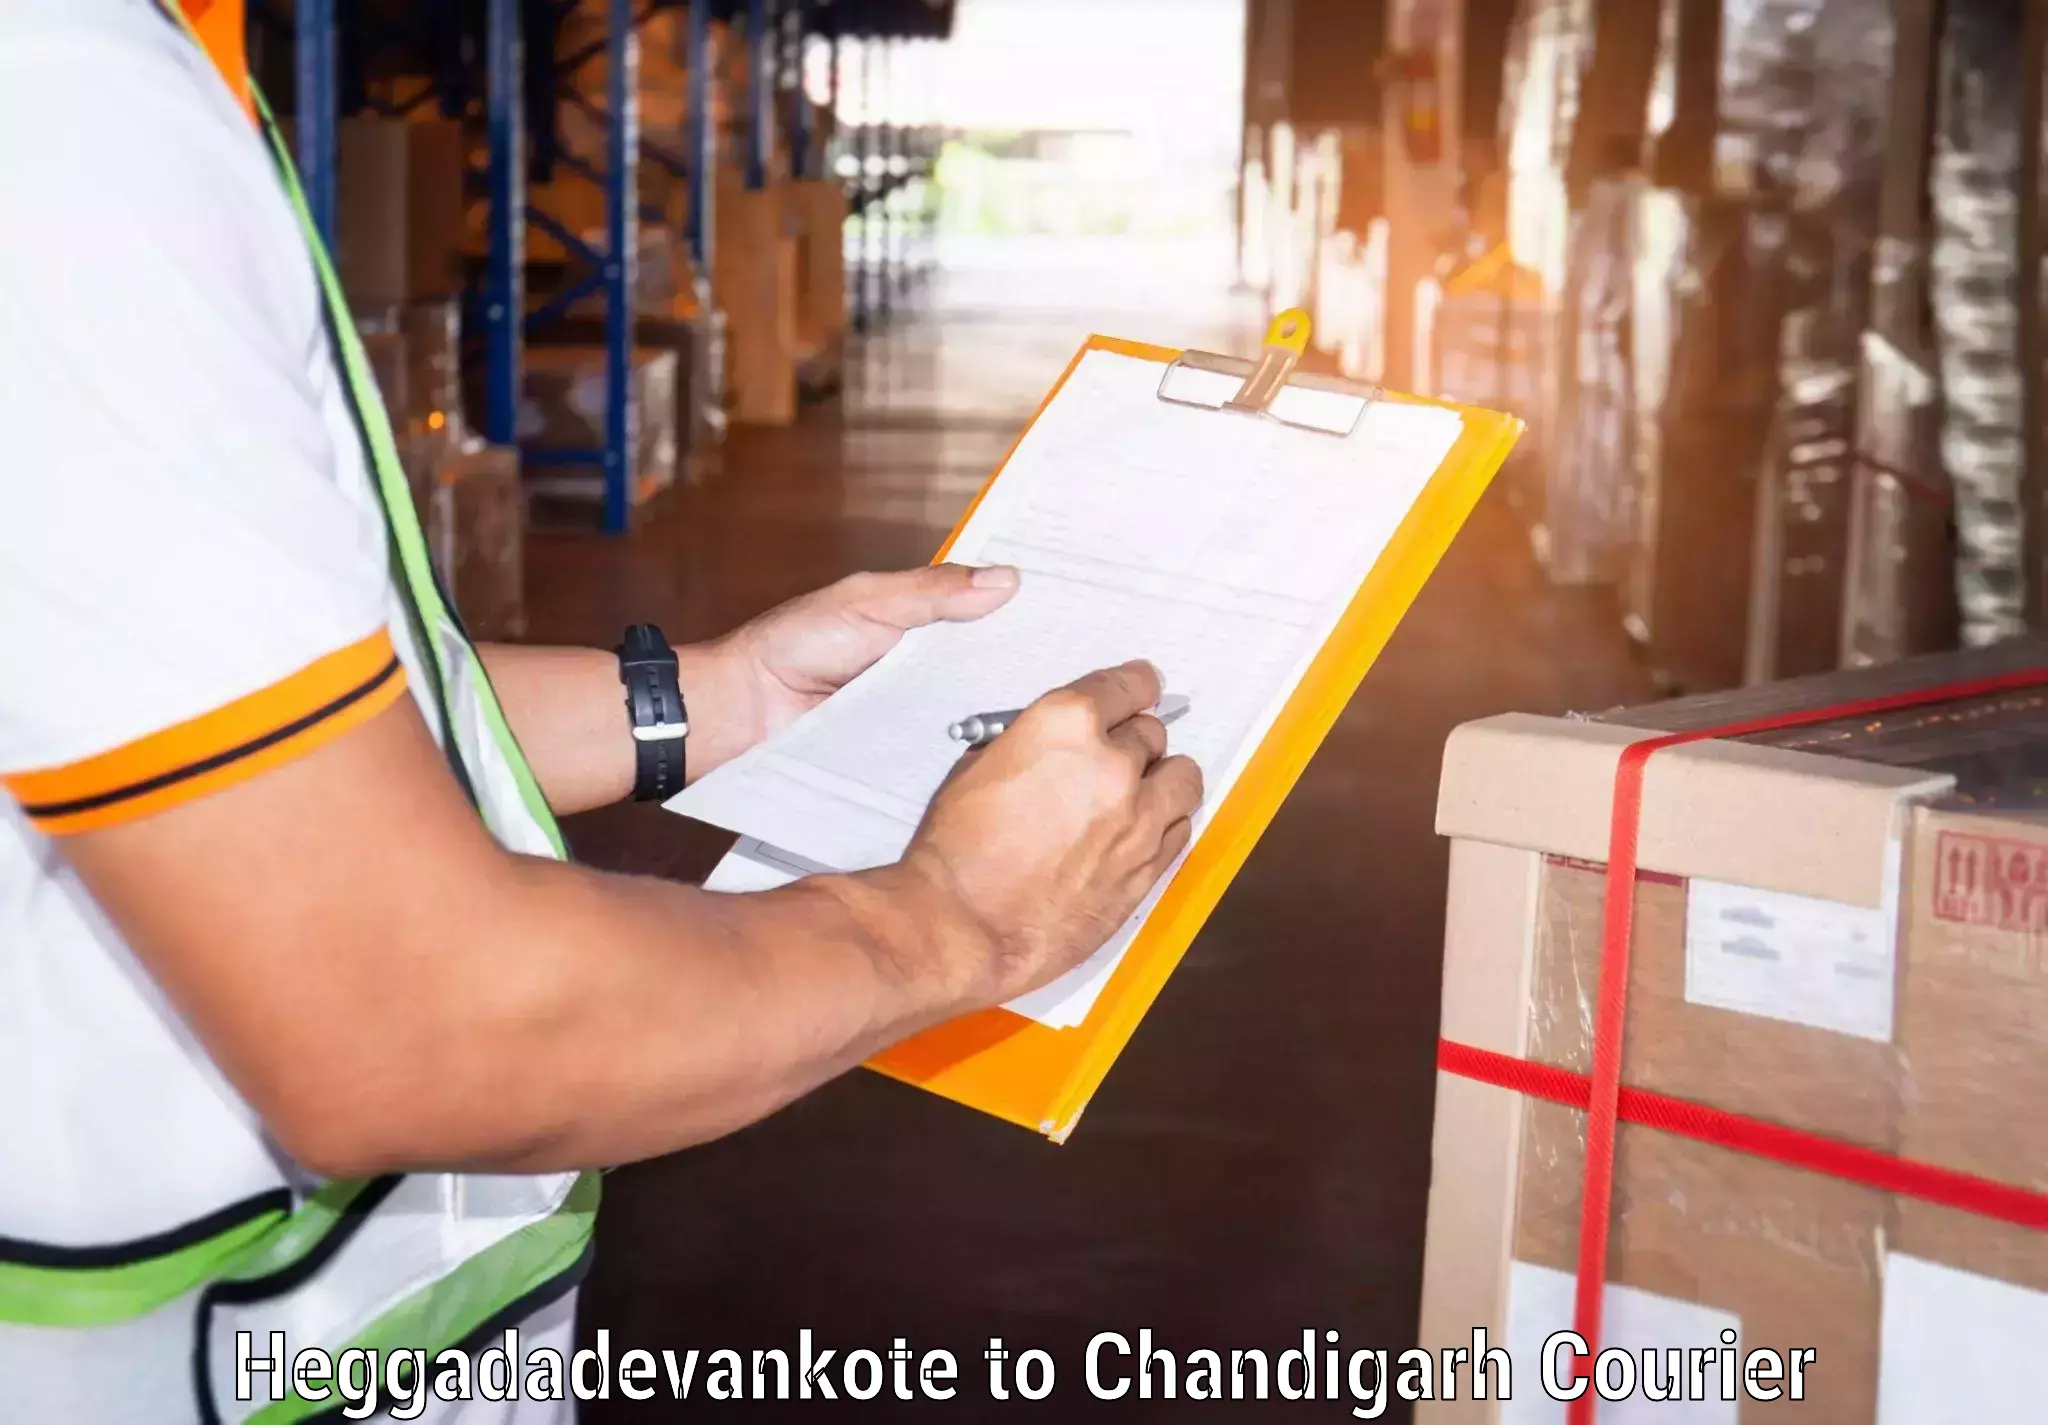 Express mail service Heggadadevankote to Chandigarh